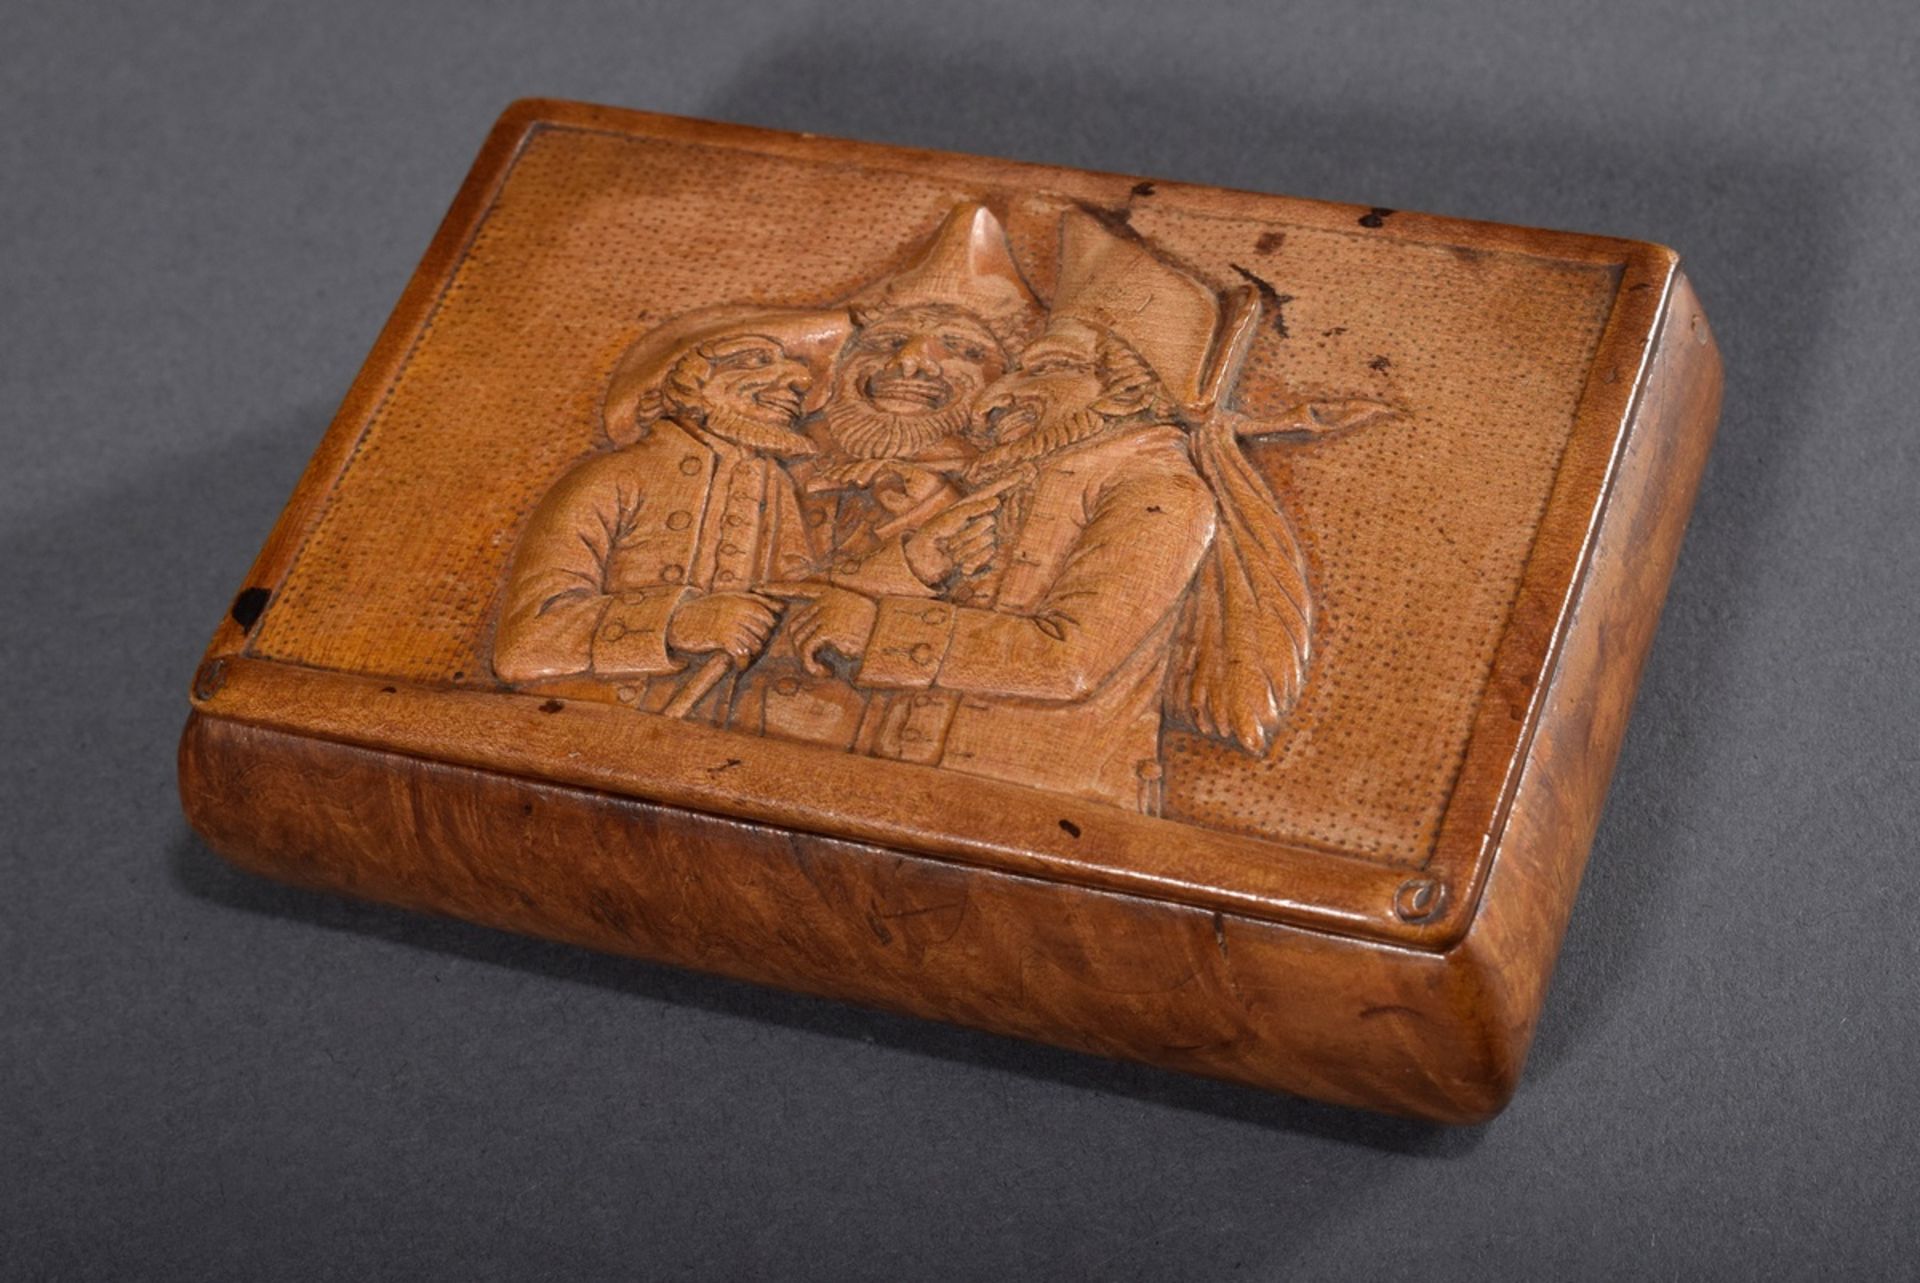 Wurzelholz Schnupftabakdose mit geschnitztem Rel | Burl wood snuff box with carved relief in the li - Bild 2 aus 8